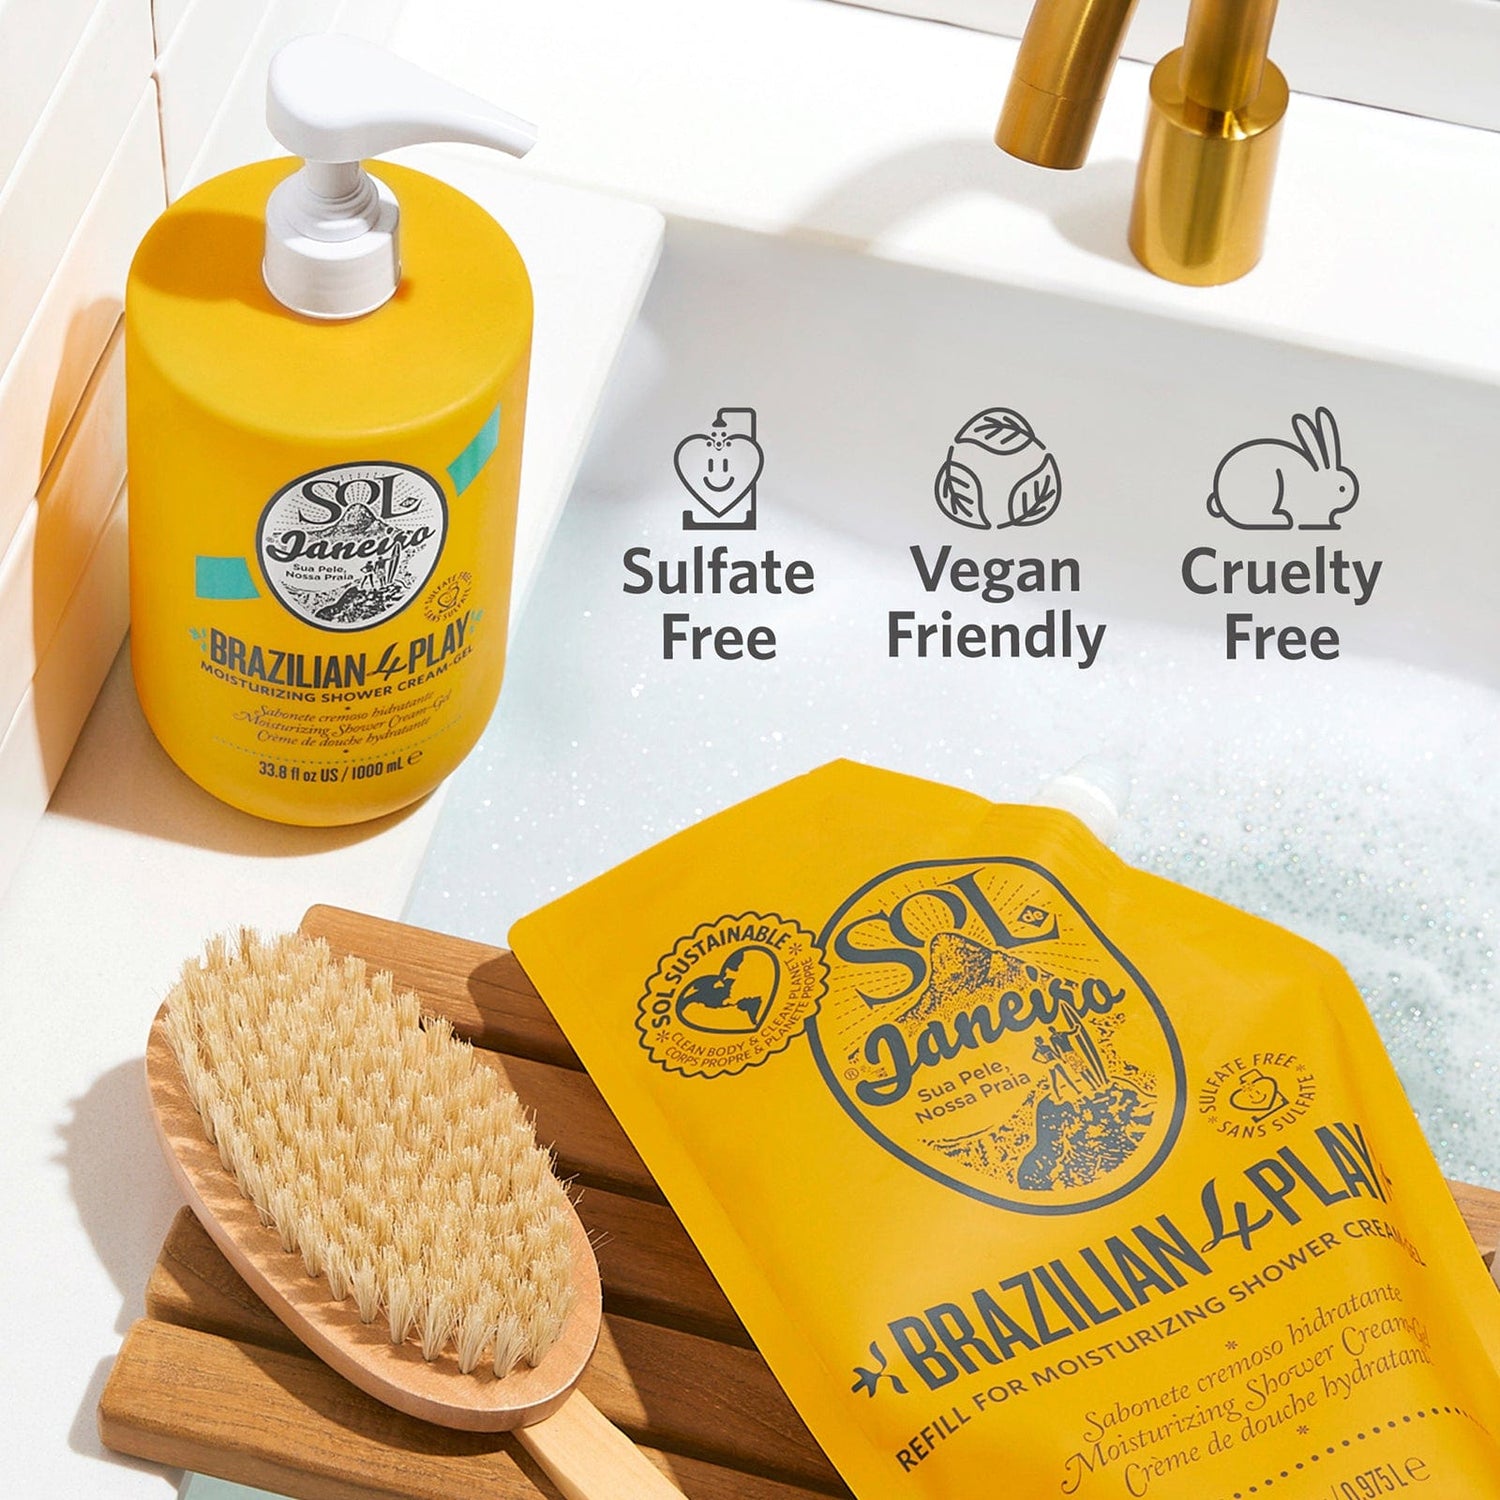 Sulfate Free Vegan friend Cruelty free |  Brazilian 4 Play Moisturizing Shower Cream-Gel 1 liter | Sol de janeiro